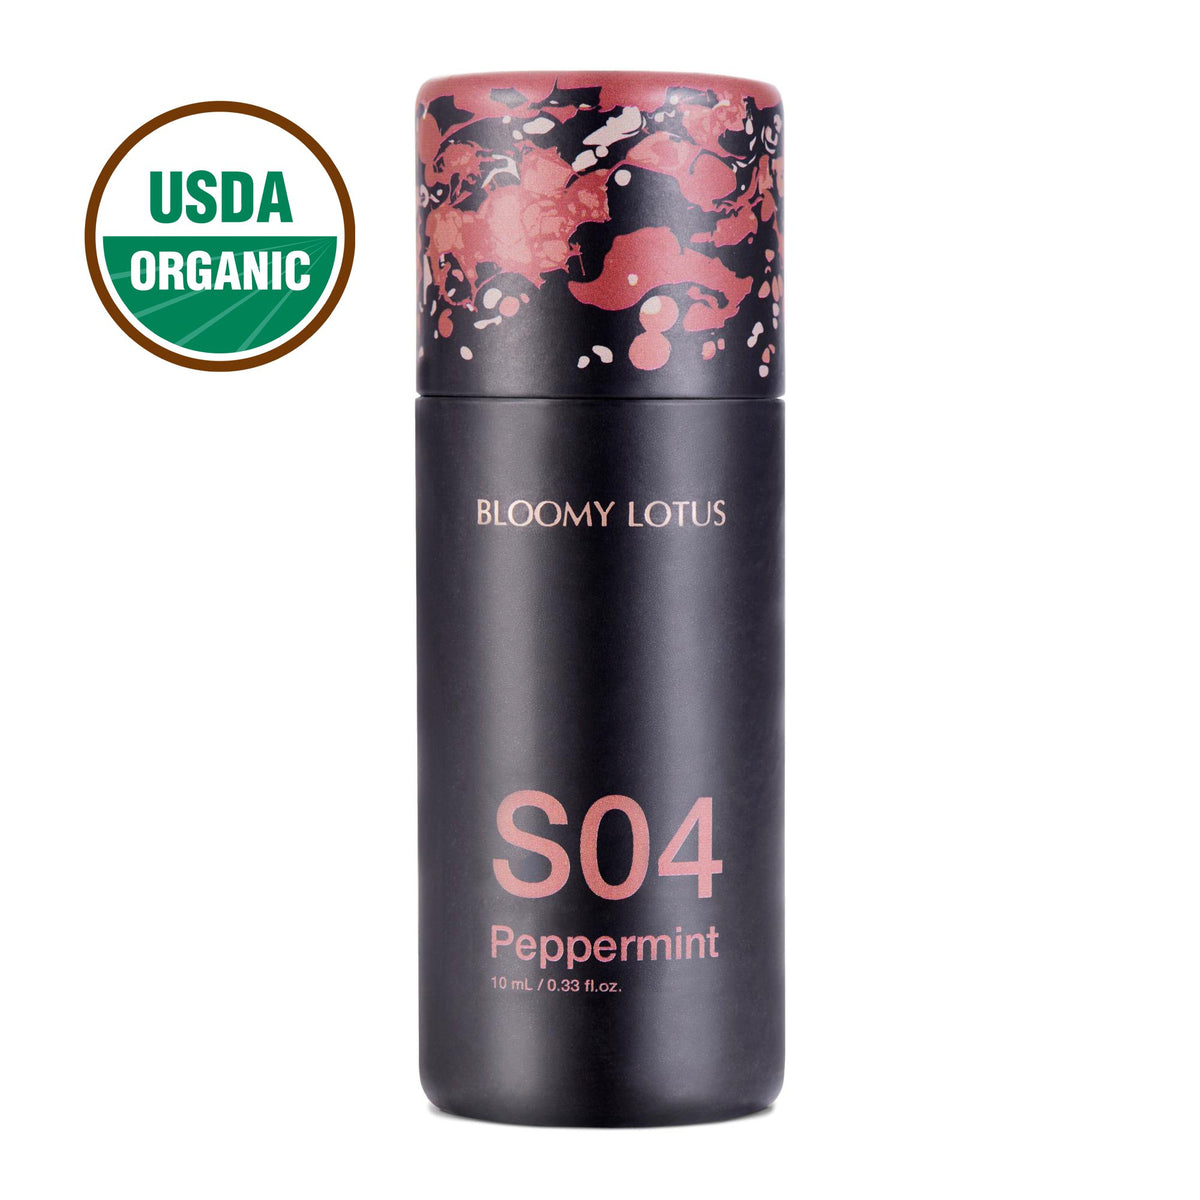 S04 Peppermint Essential Oil, 10 ml